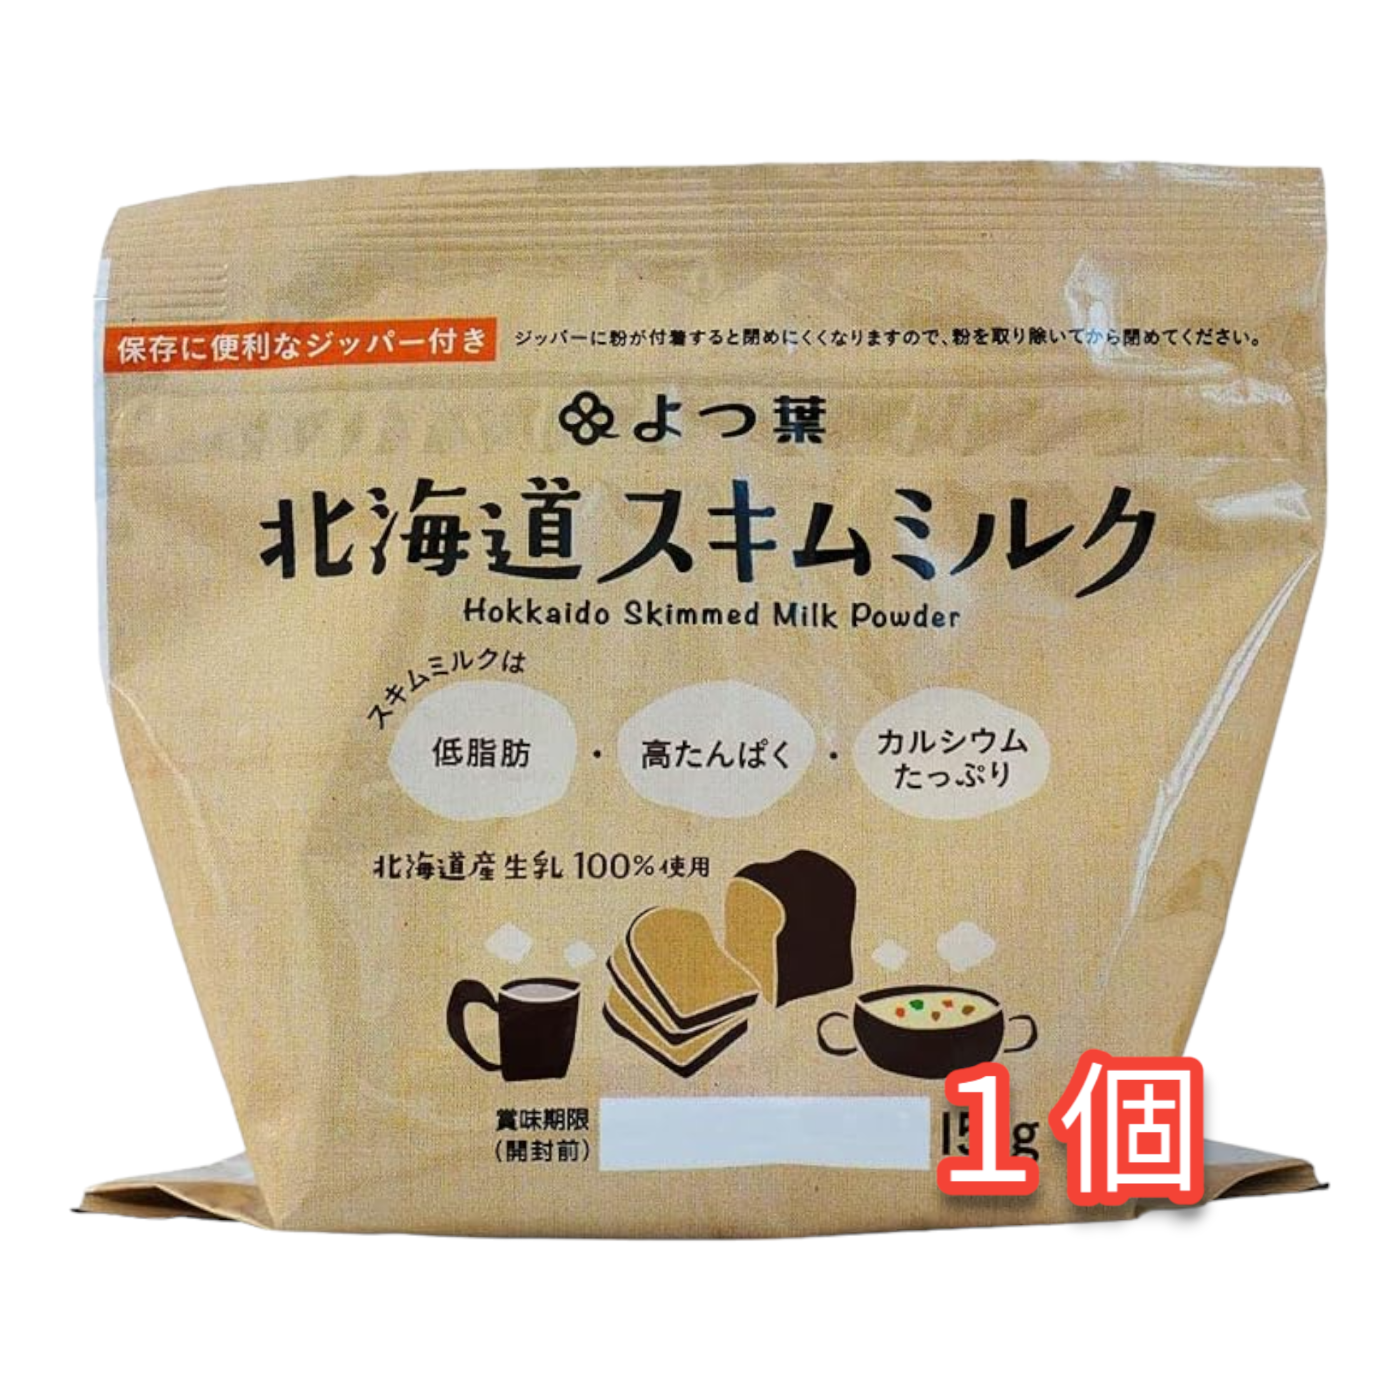 yo. leaf Hokkaido skim milk 150g... degreasing flour .